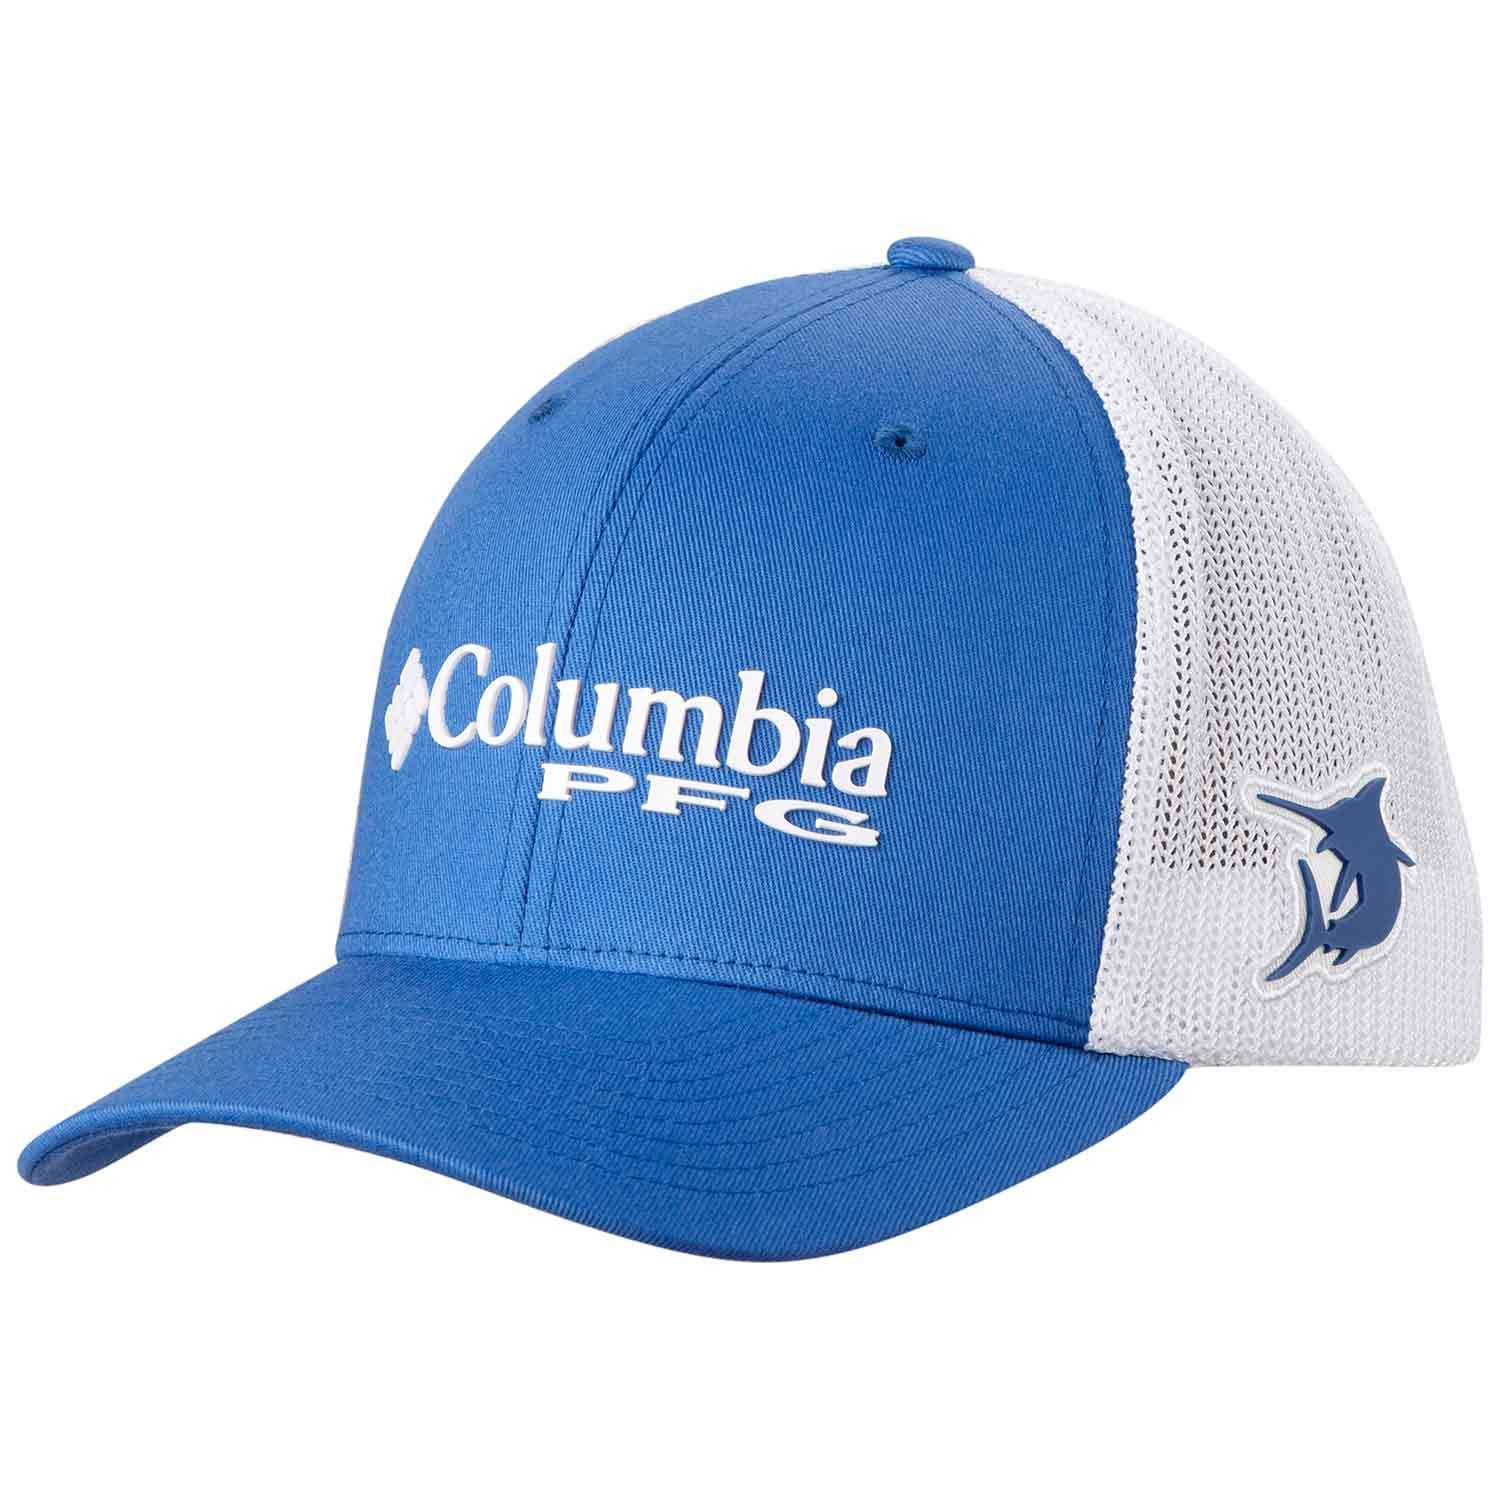 Columbia Men's PFG Ball Cap - 1503971-106-S/M